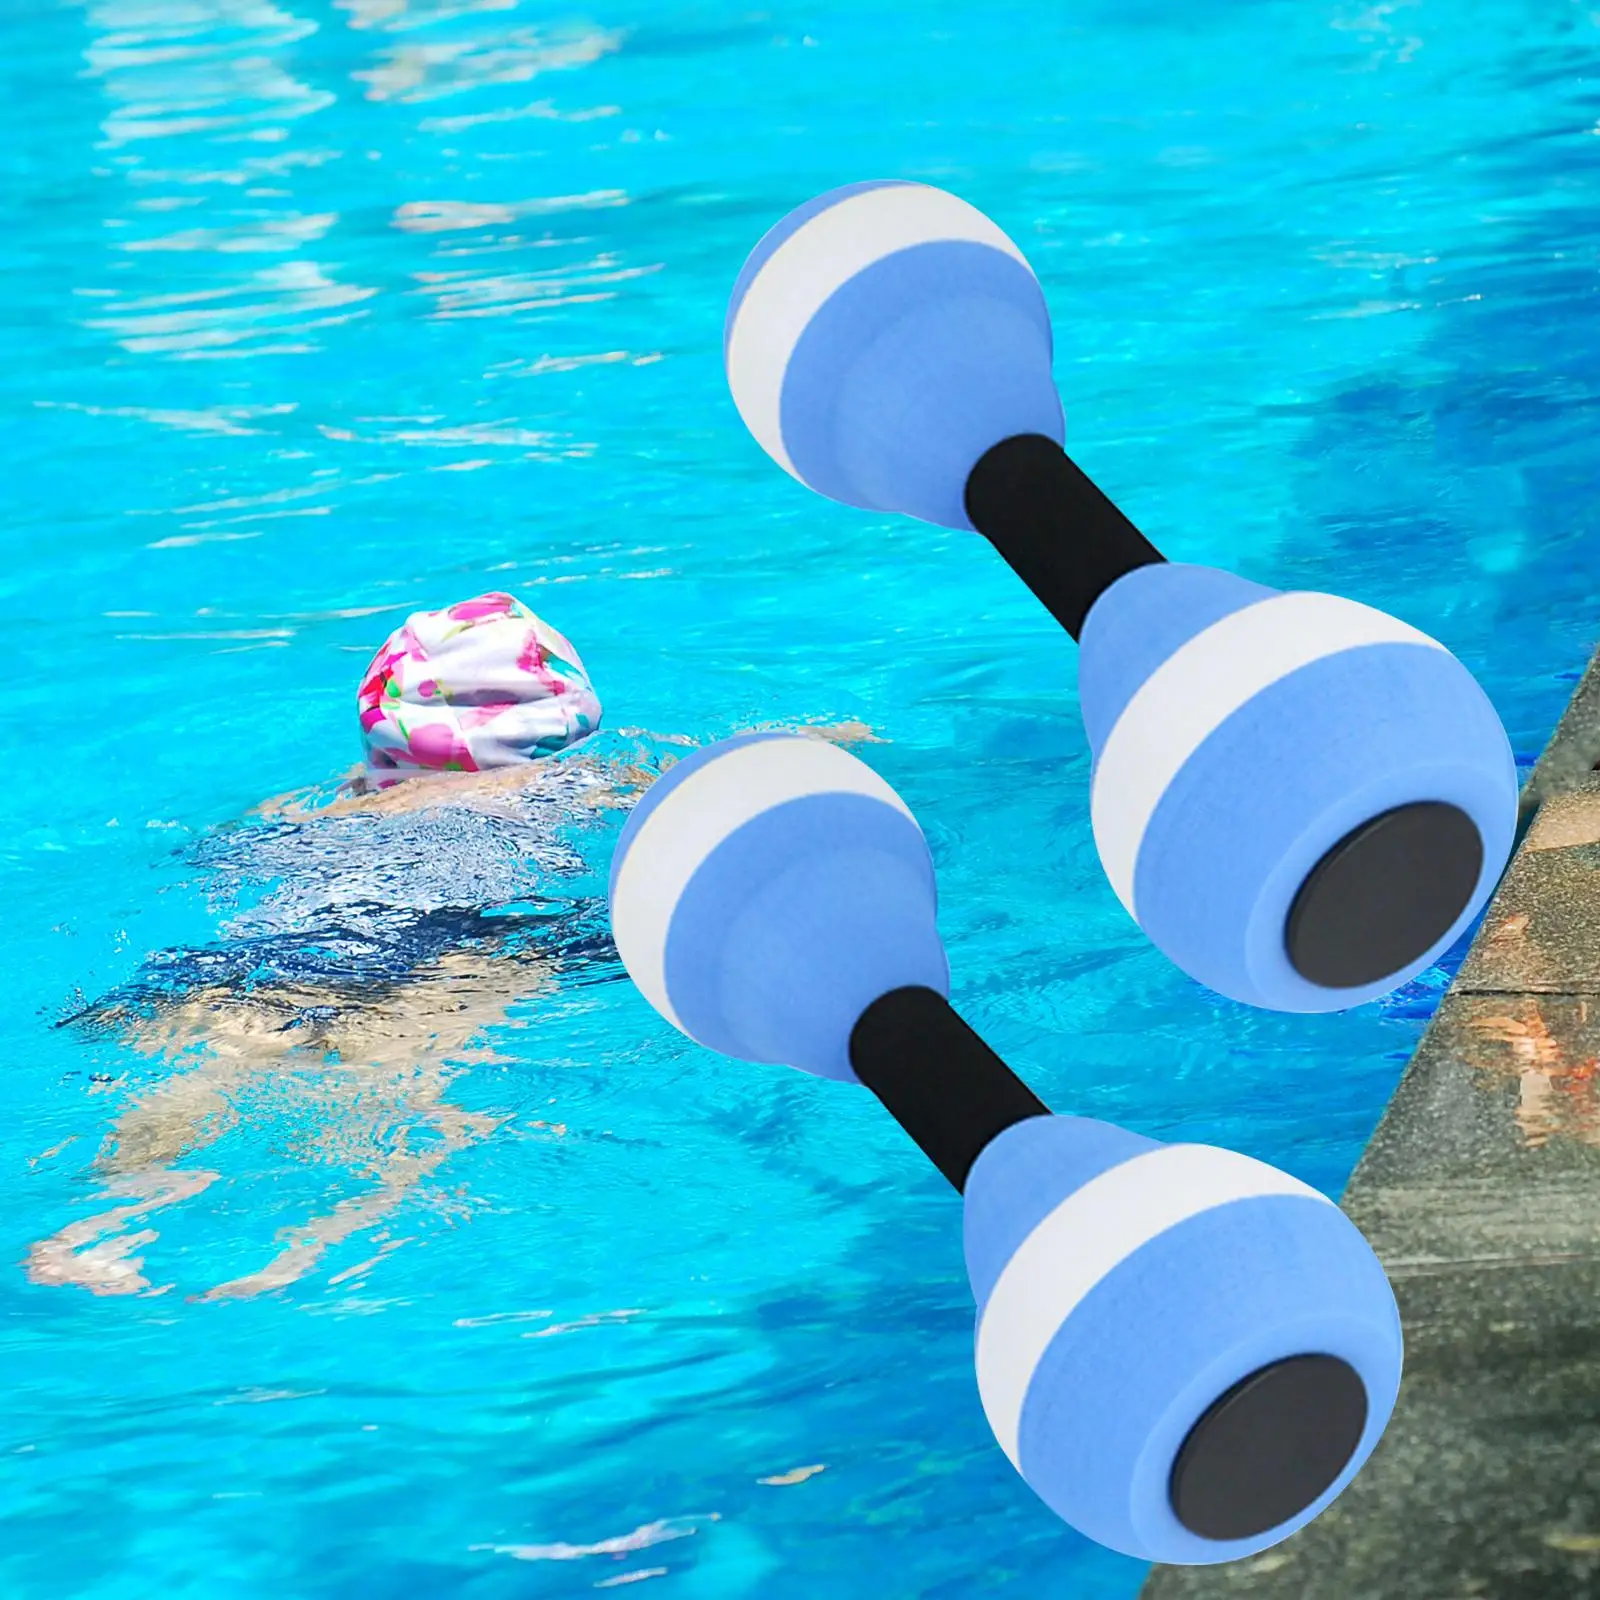 Aquatic Dumbells, Water Aerobic Exercise Dumbbell Pool Resistance, Hand Bar